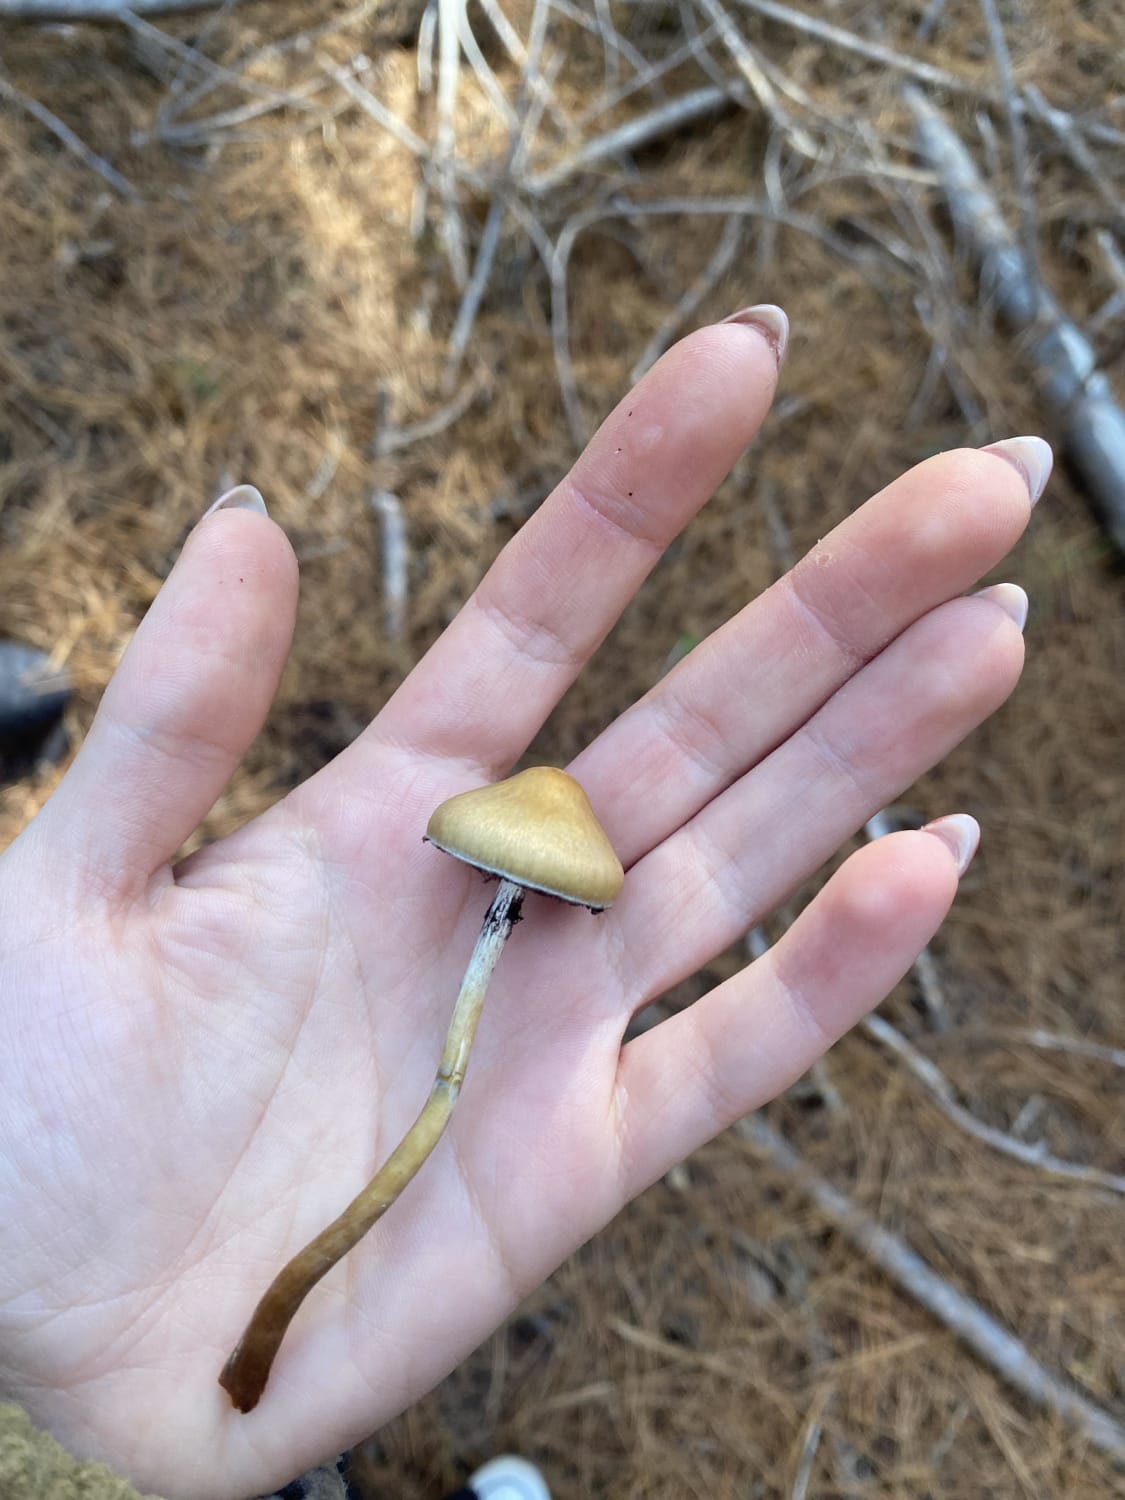 Found in Australia, think it might be Psilocybe subaerigunosa?